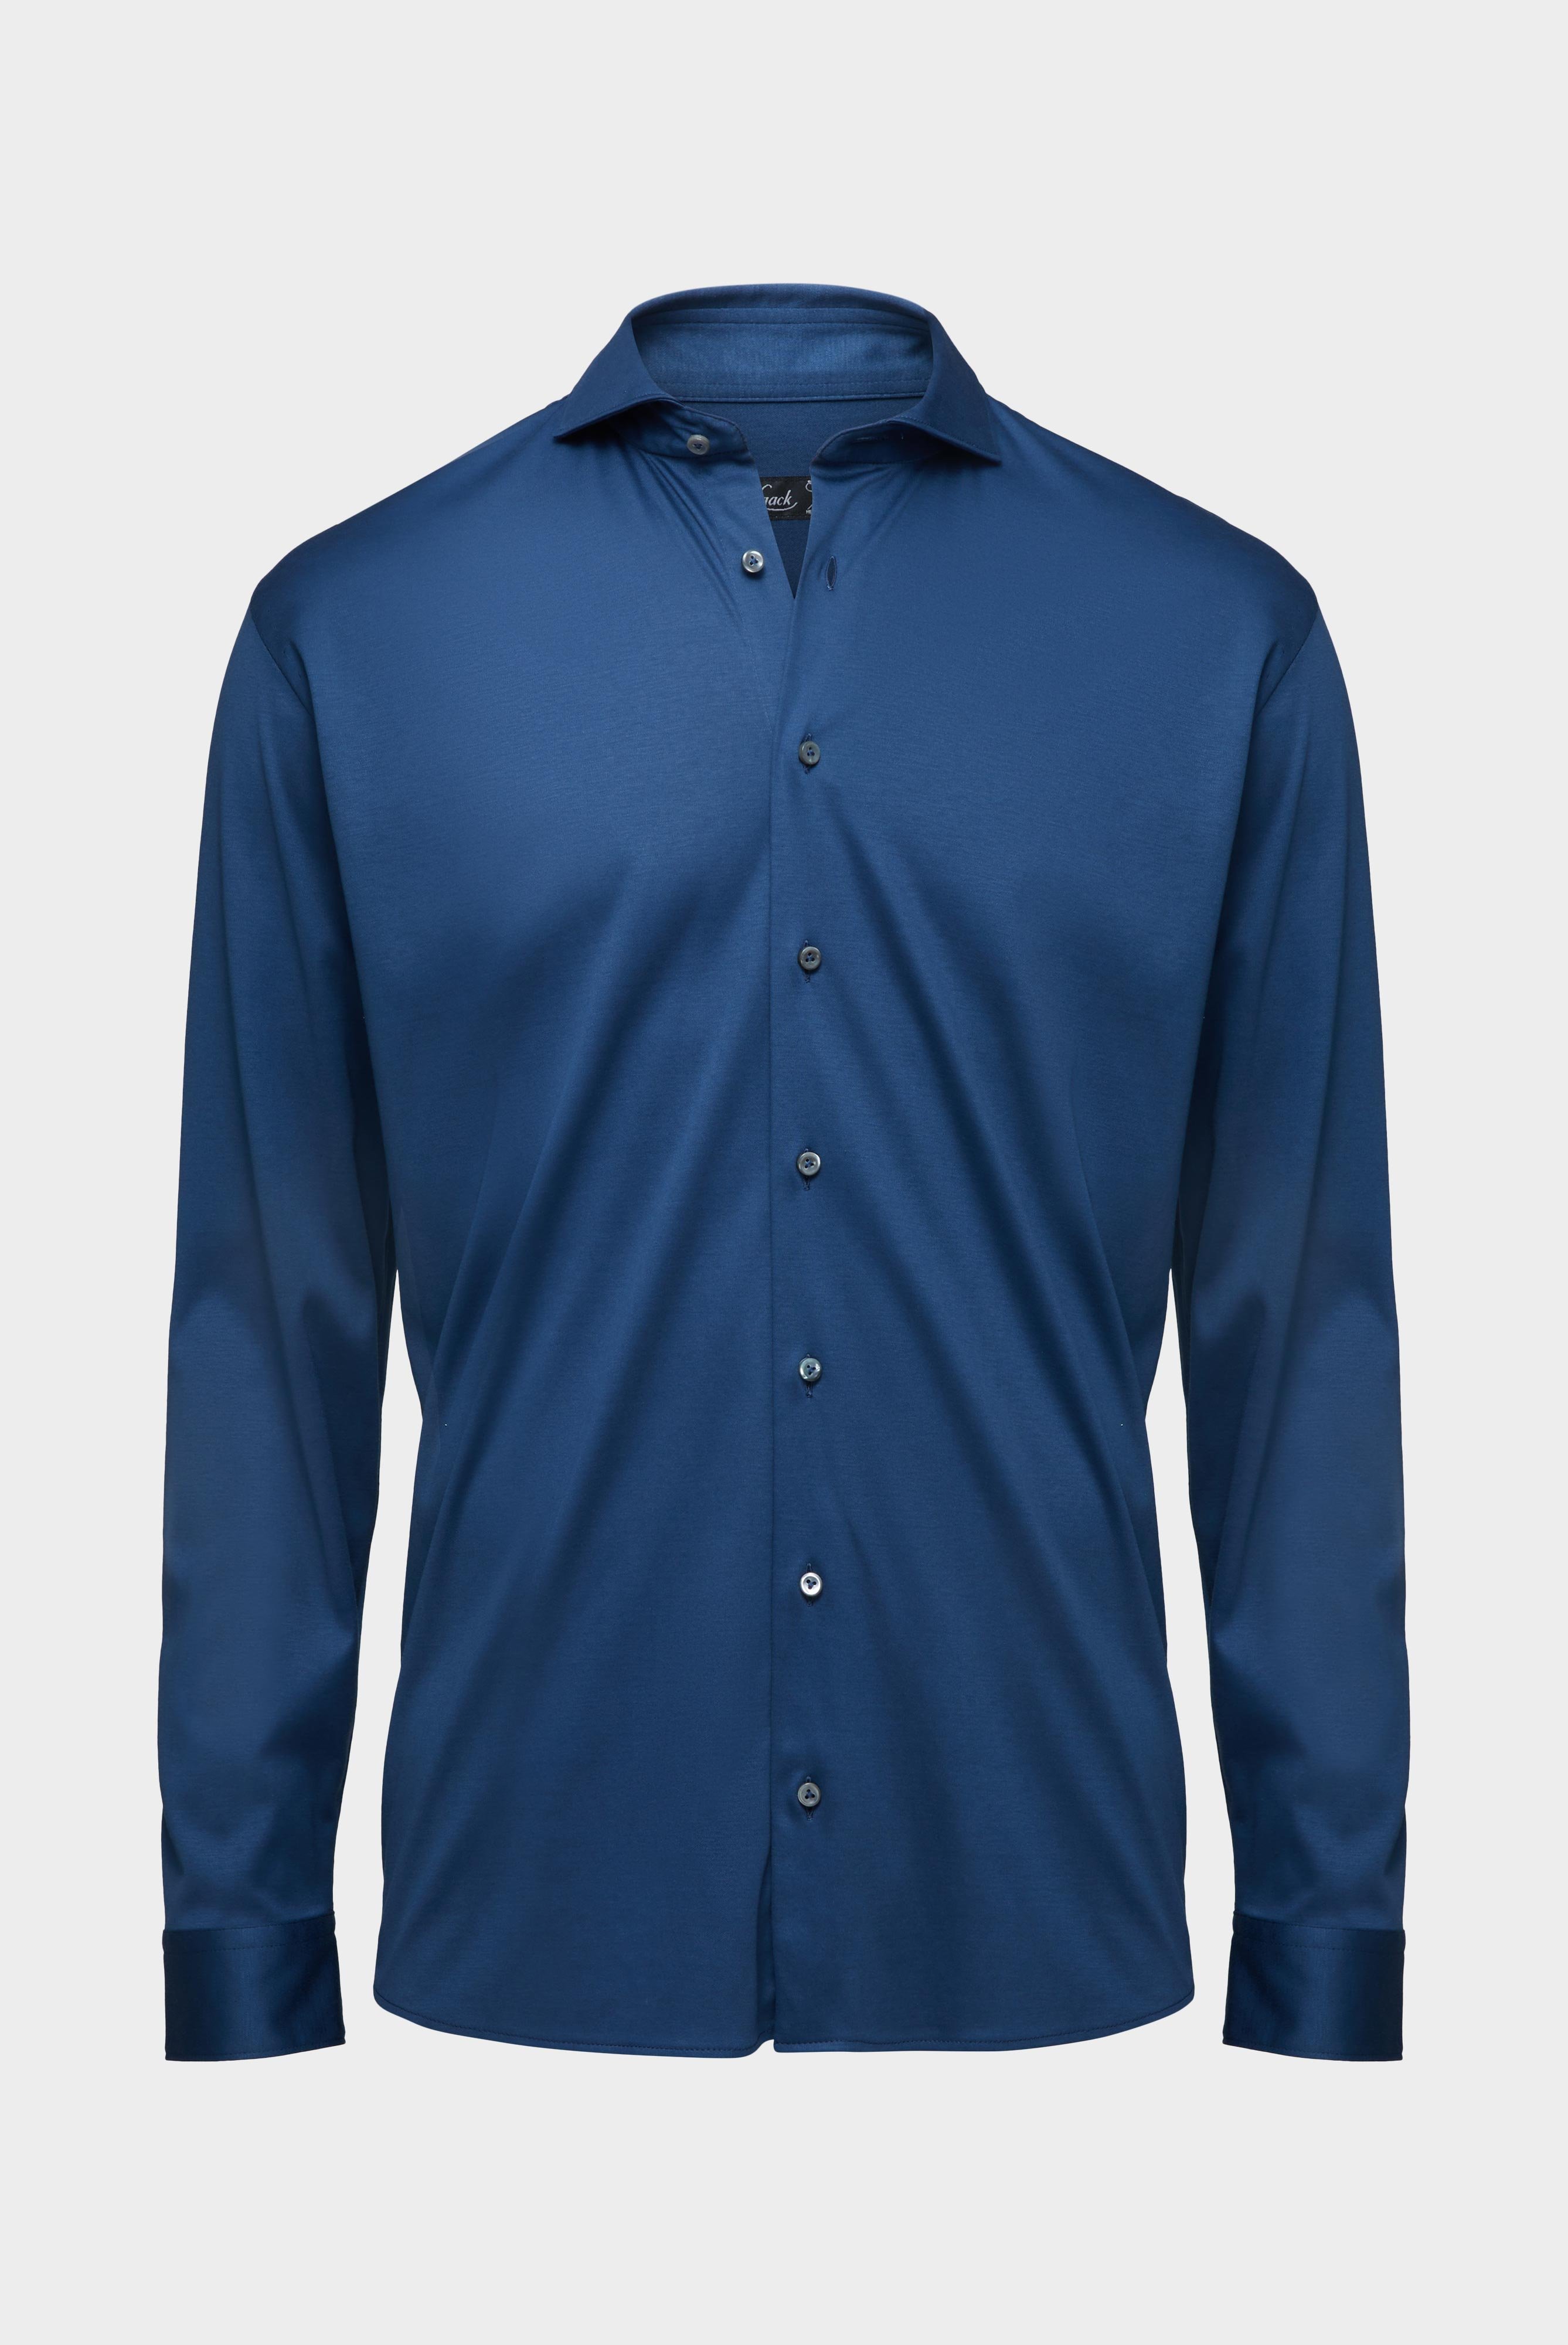 Casual Shirts+Jersey Shirt Swiss Cotton Tailor Fit+20.1683.UC.180031.780.XXL